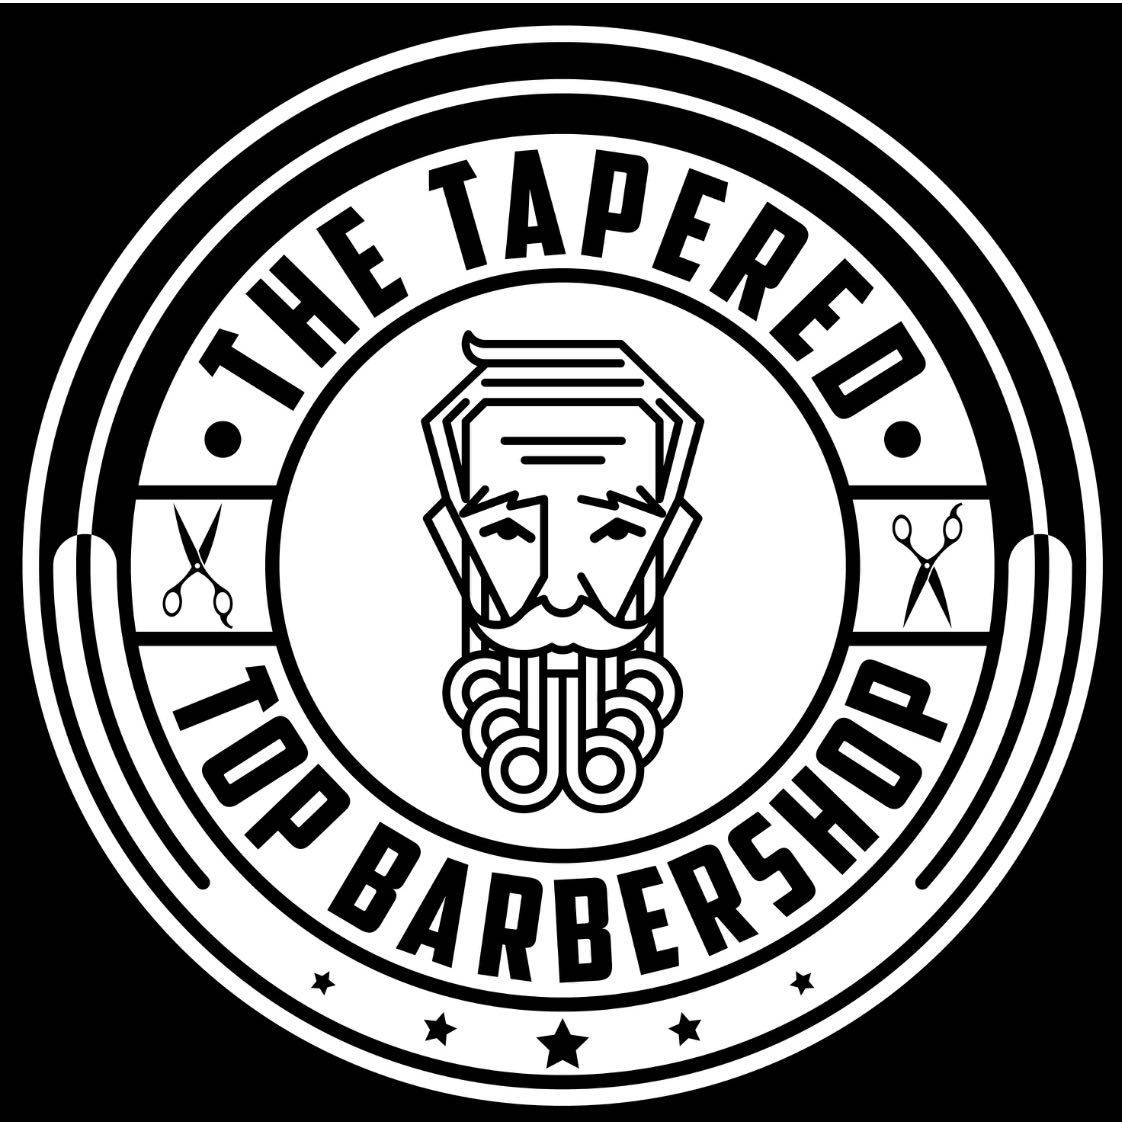 The Tapered Top Barbershop, 2243 E. 17th Street, Idaho Falls, ID, 83404